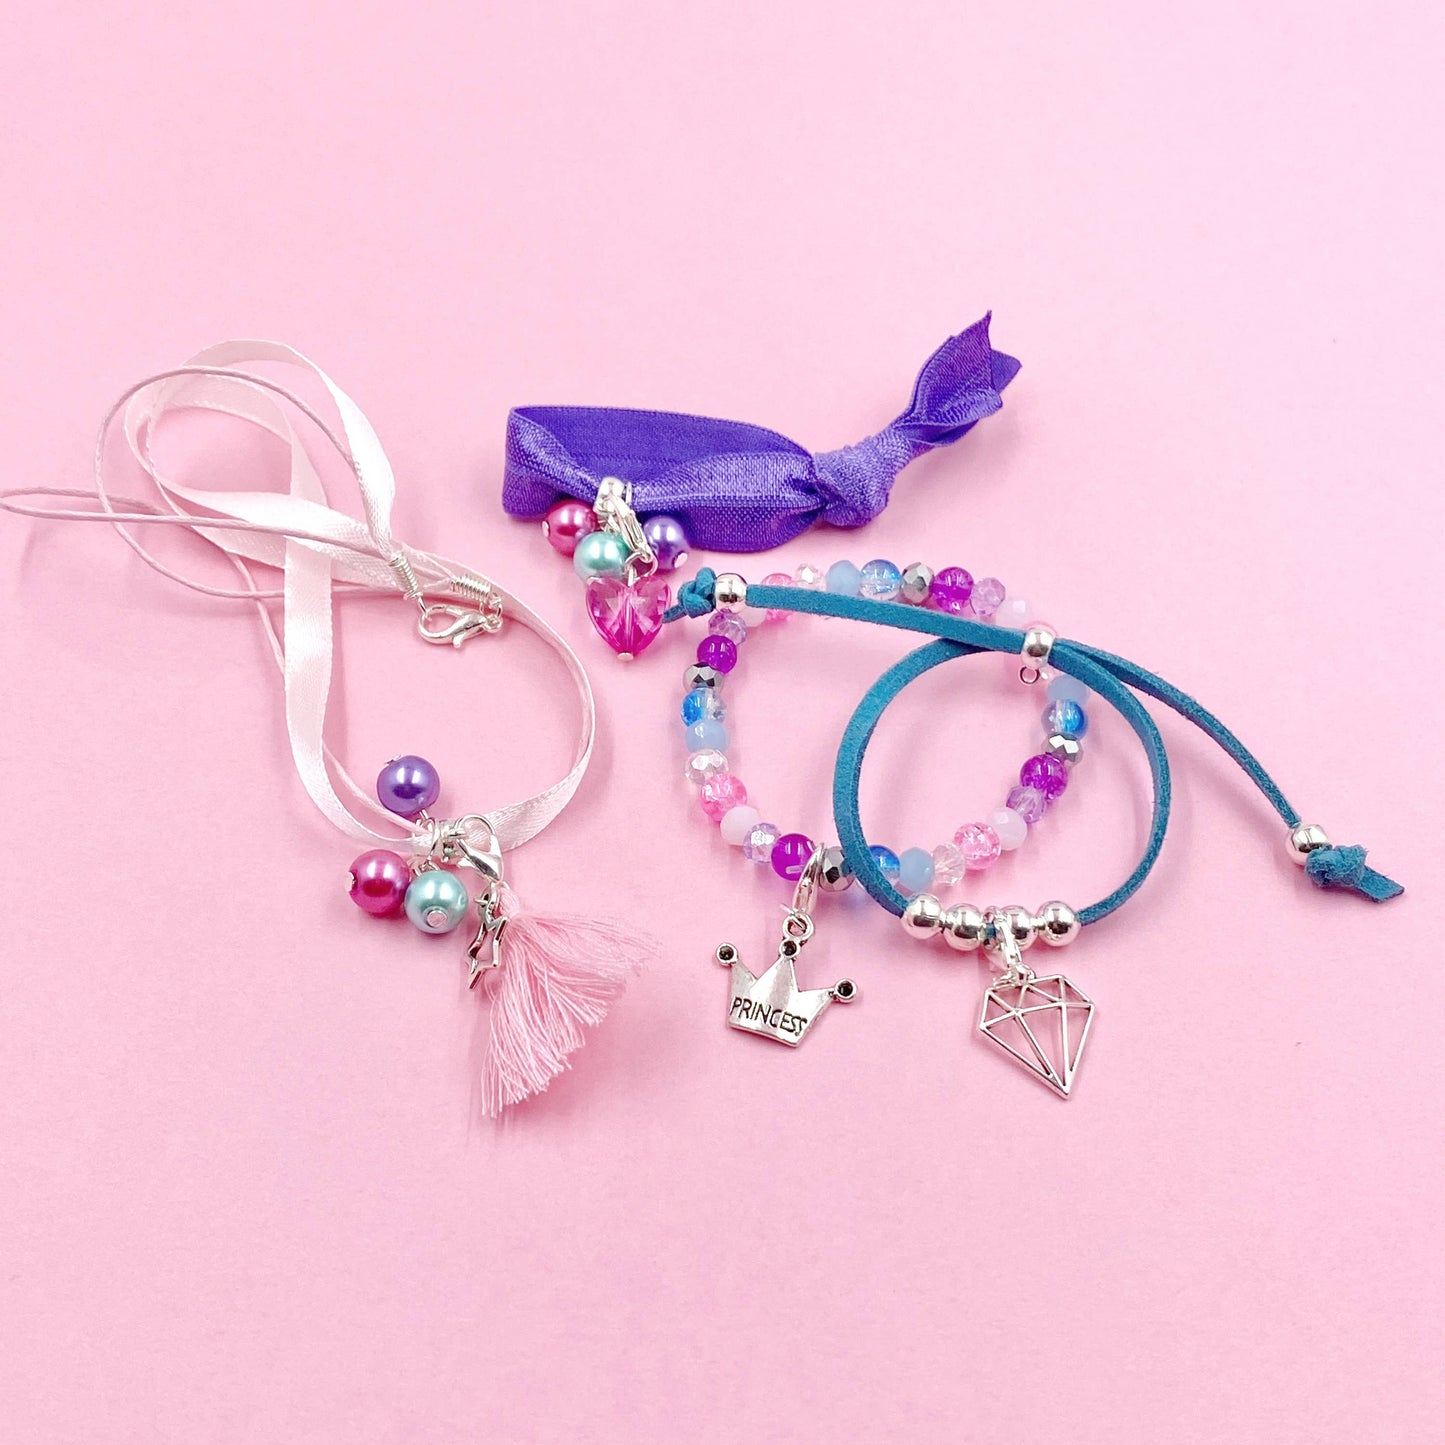 Princess Jewellery Making Kit for Children